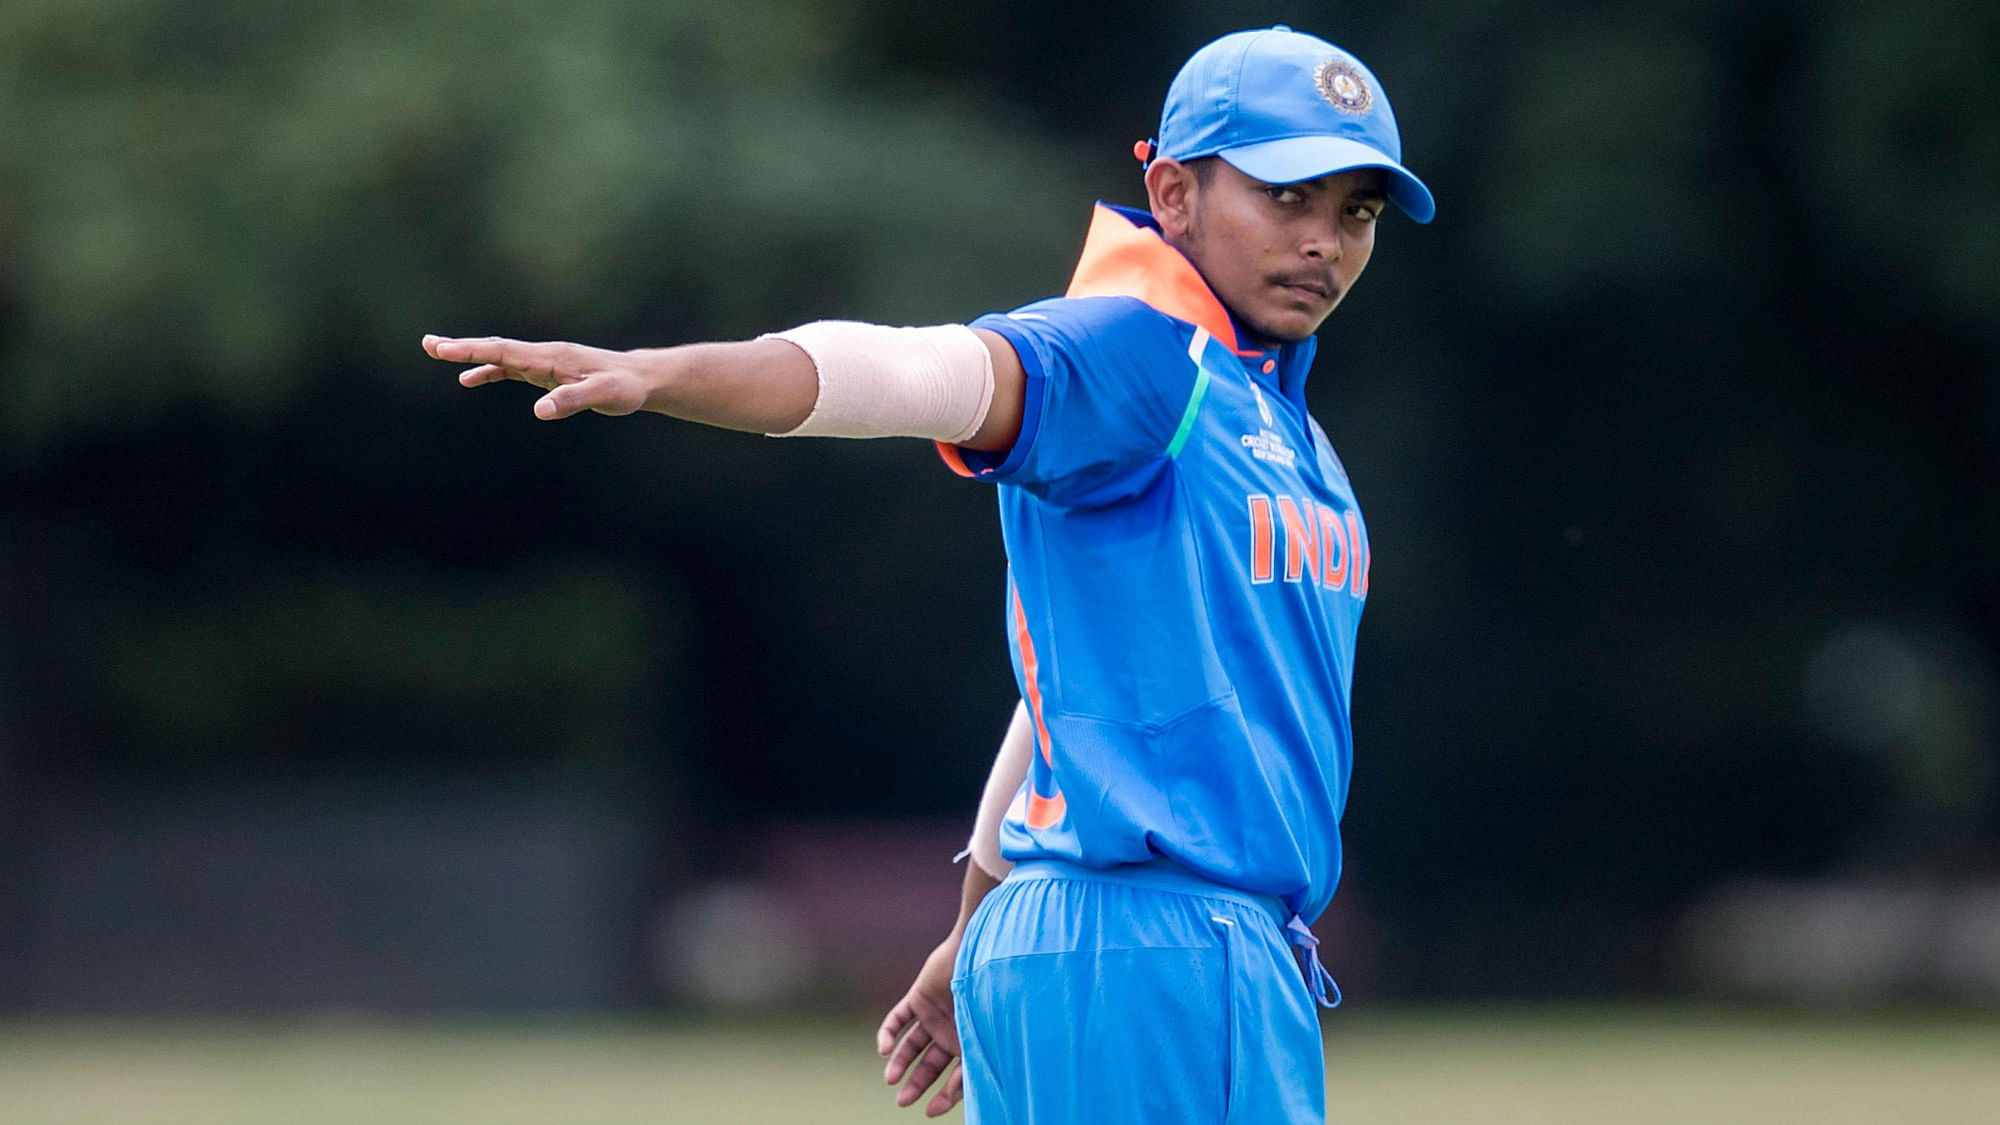 India U-19 captain Prithvi gets new sponsor